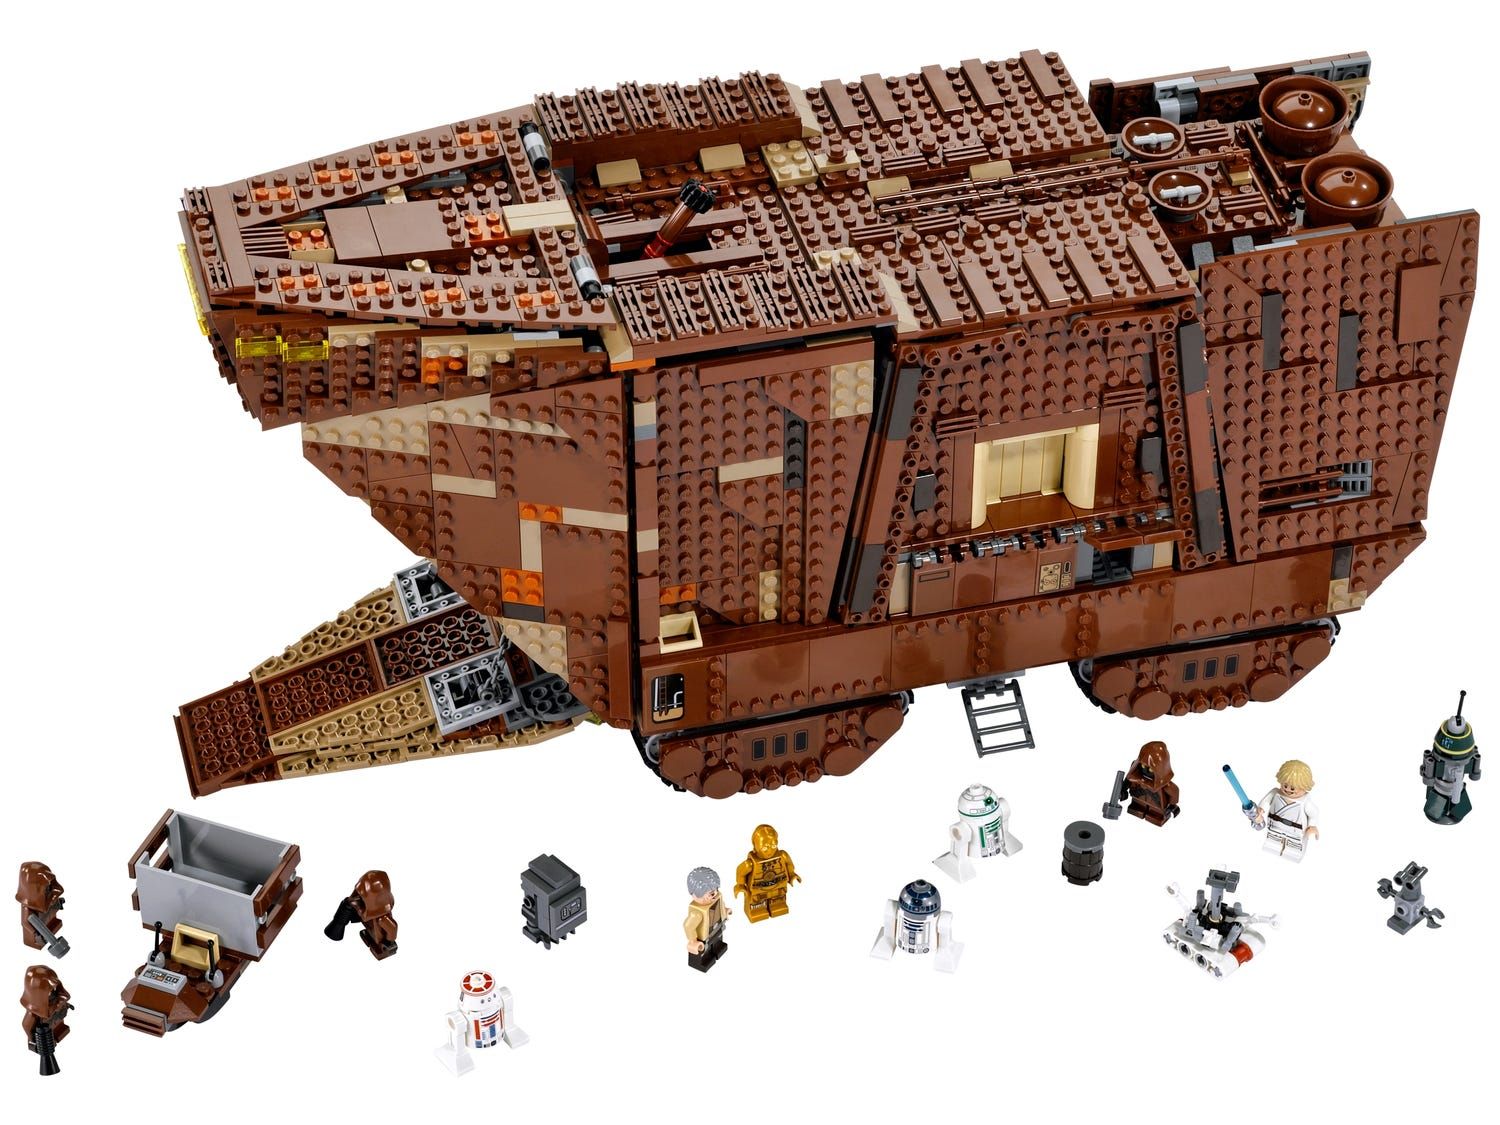 Lego Star Wars 75059 Sandcrawler